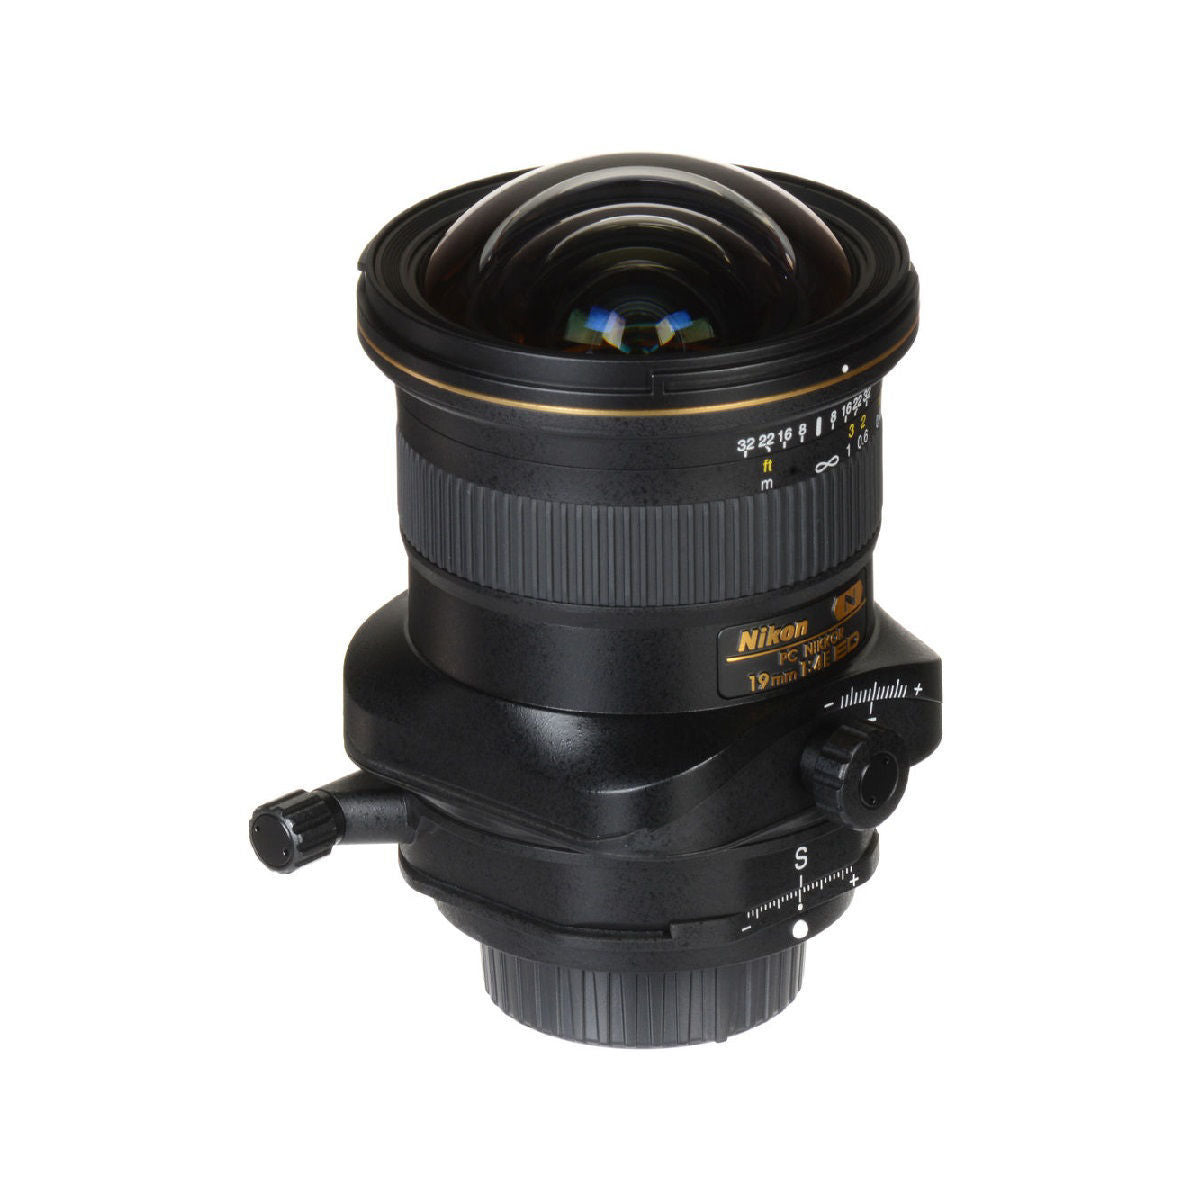 Nikon Pc Nikkor 19mm f 4E Ed Tilt Shift Lens